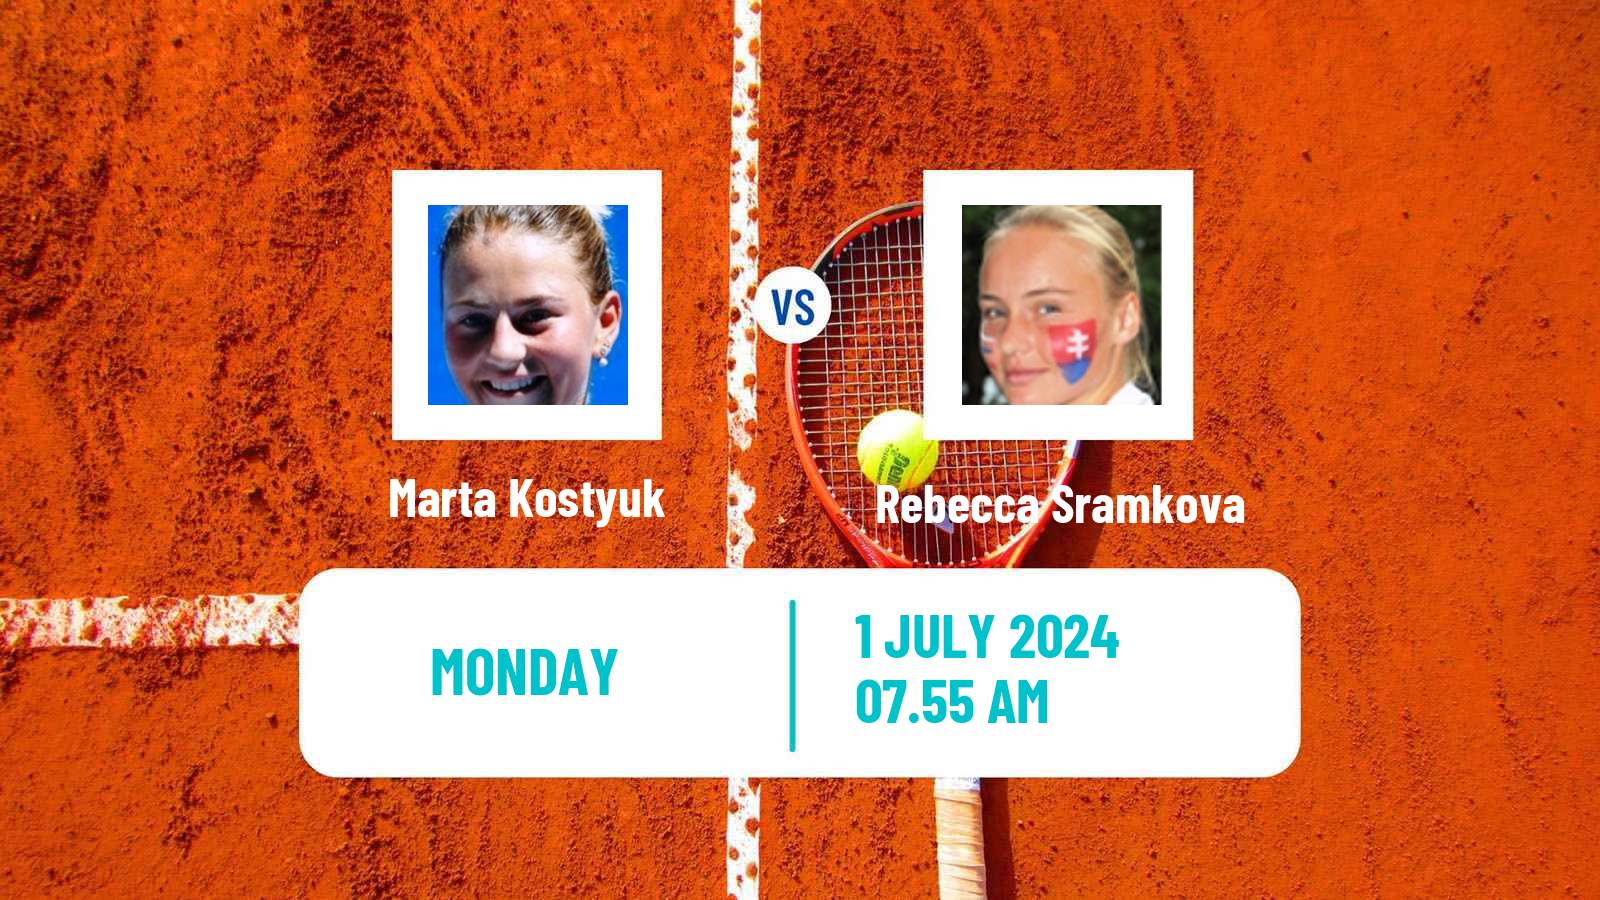 Tennis WTA Wimbledon Marta Kostyuk - Rebecca Sramkova